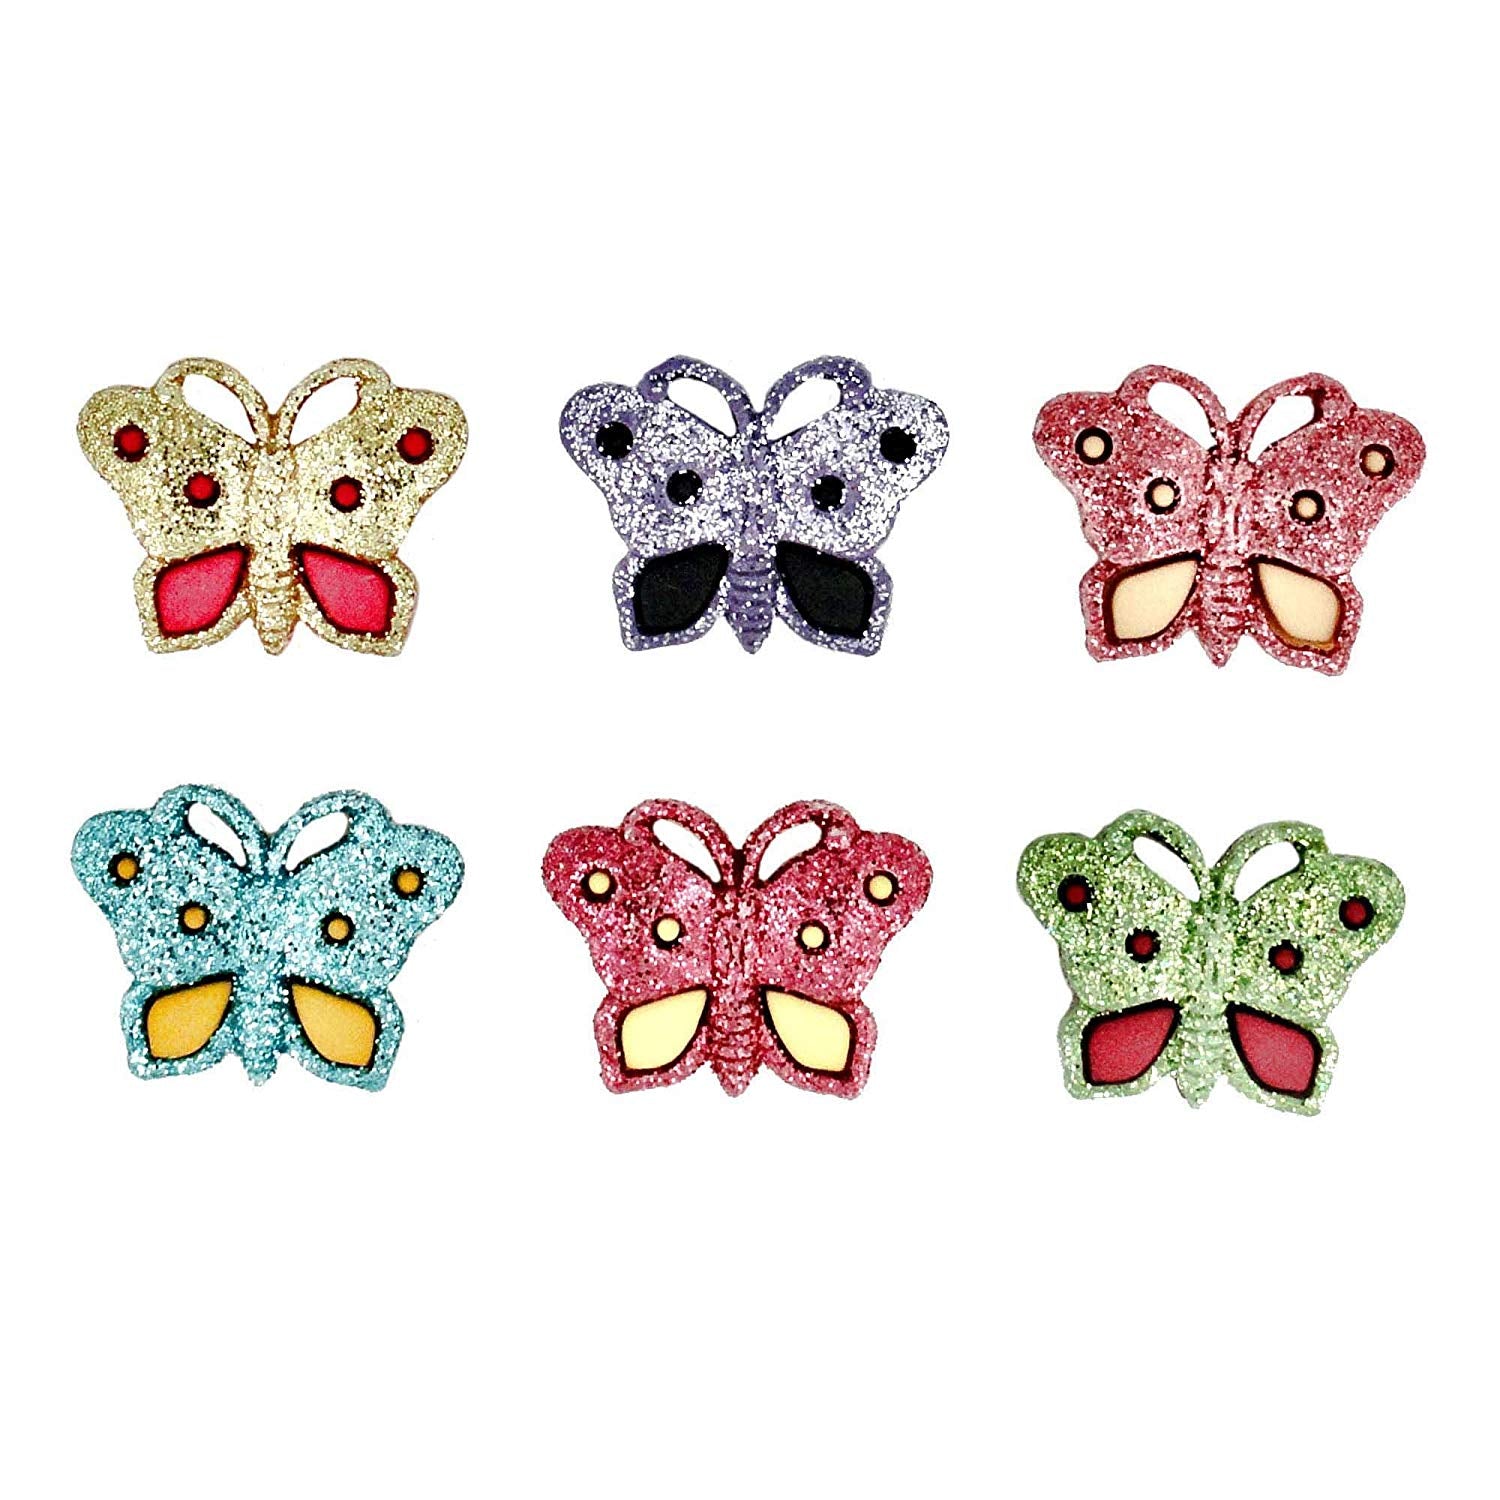 Glitter Butterfly Buttons by Jesse James